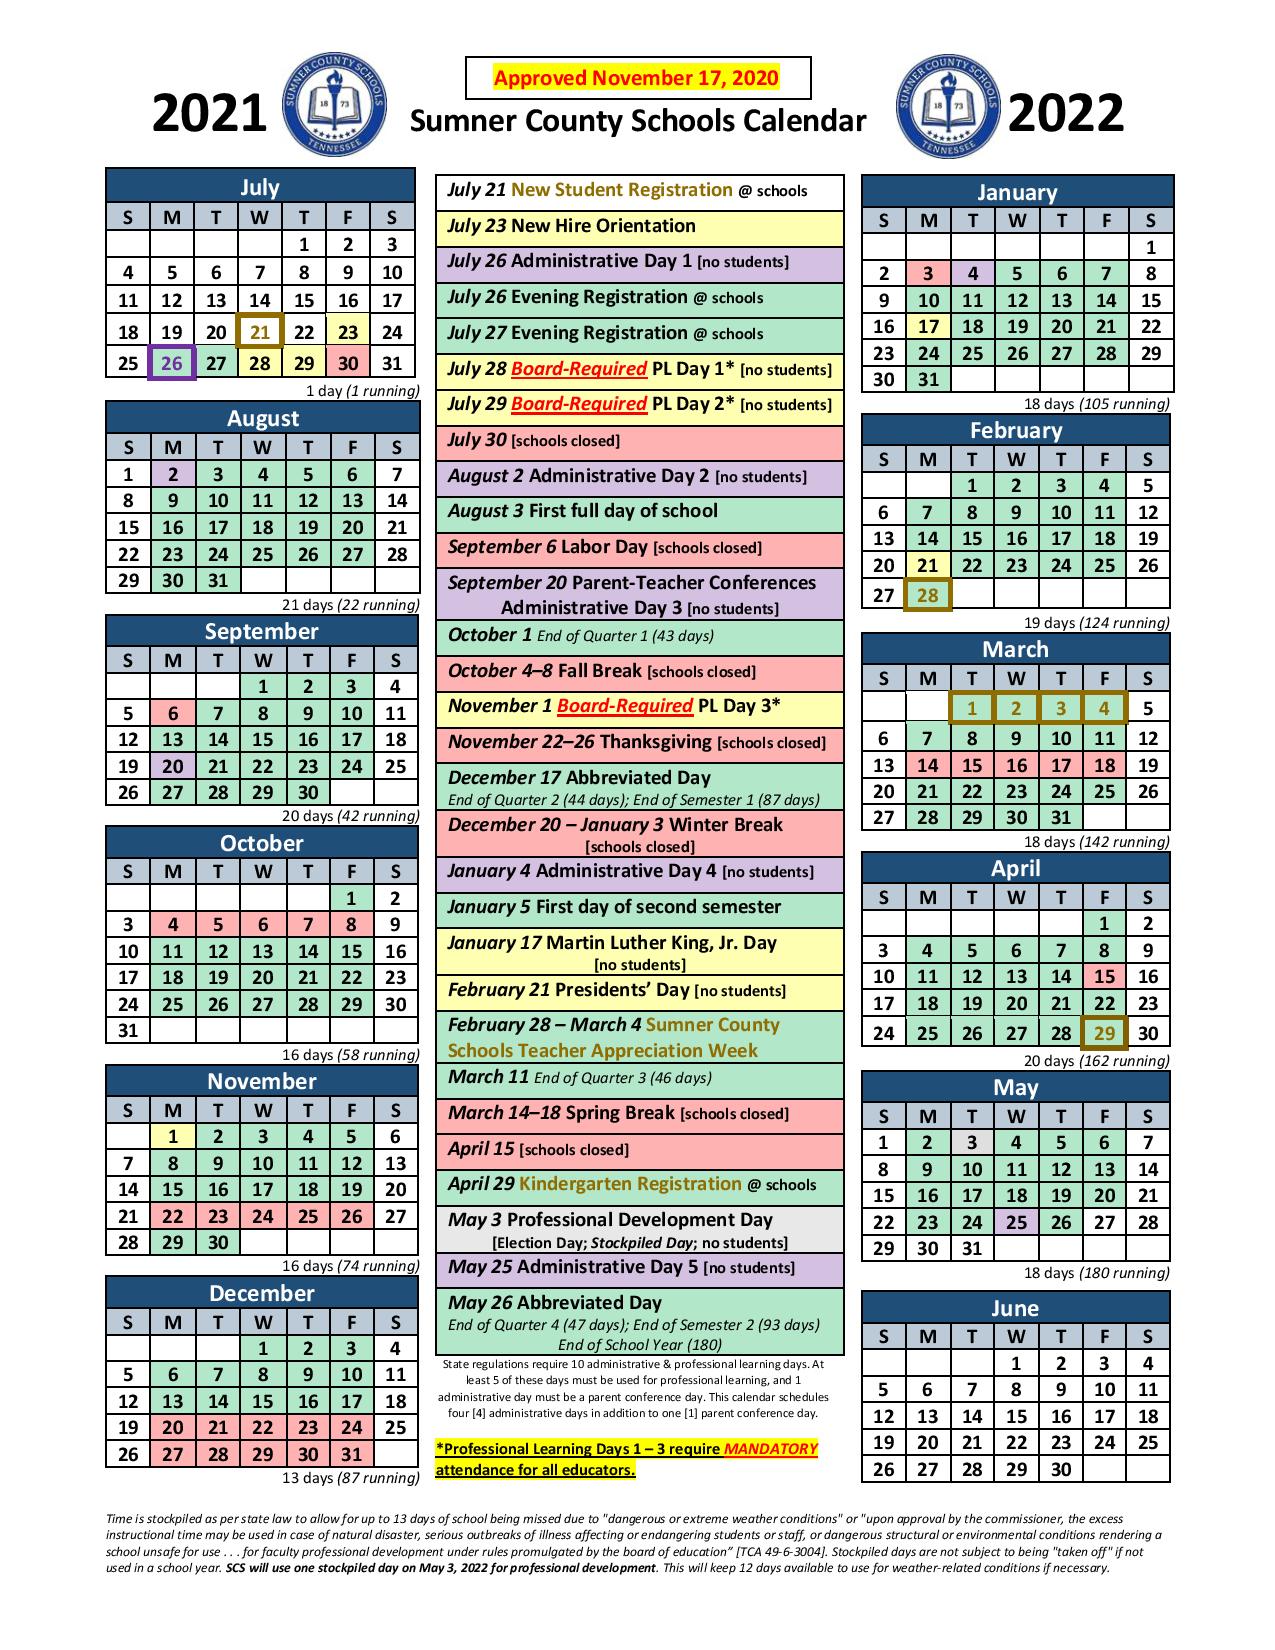 Sumner County School Calendar Holidays 2021 2022